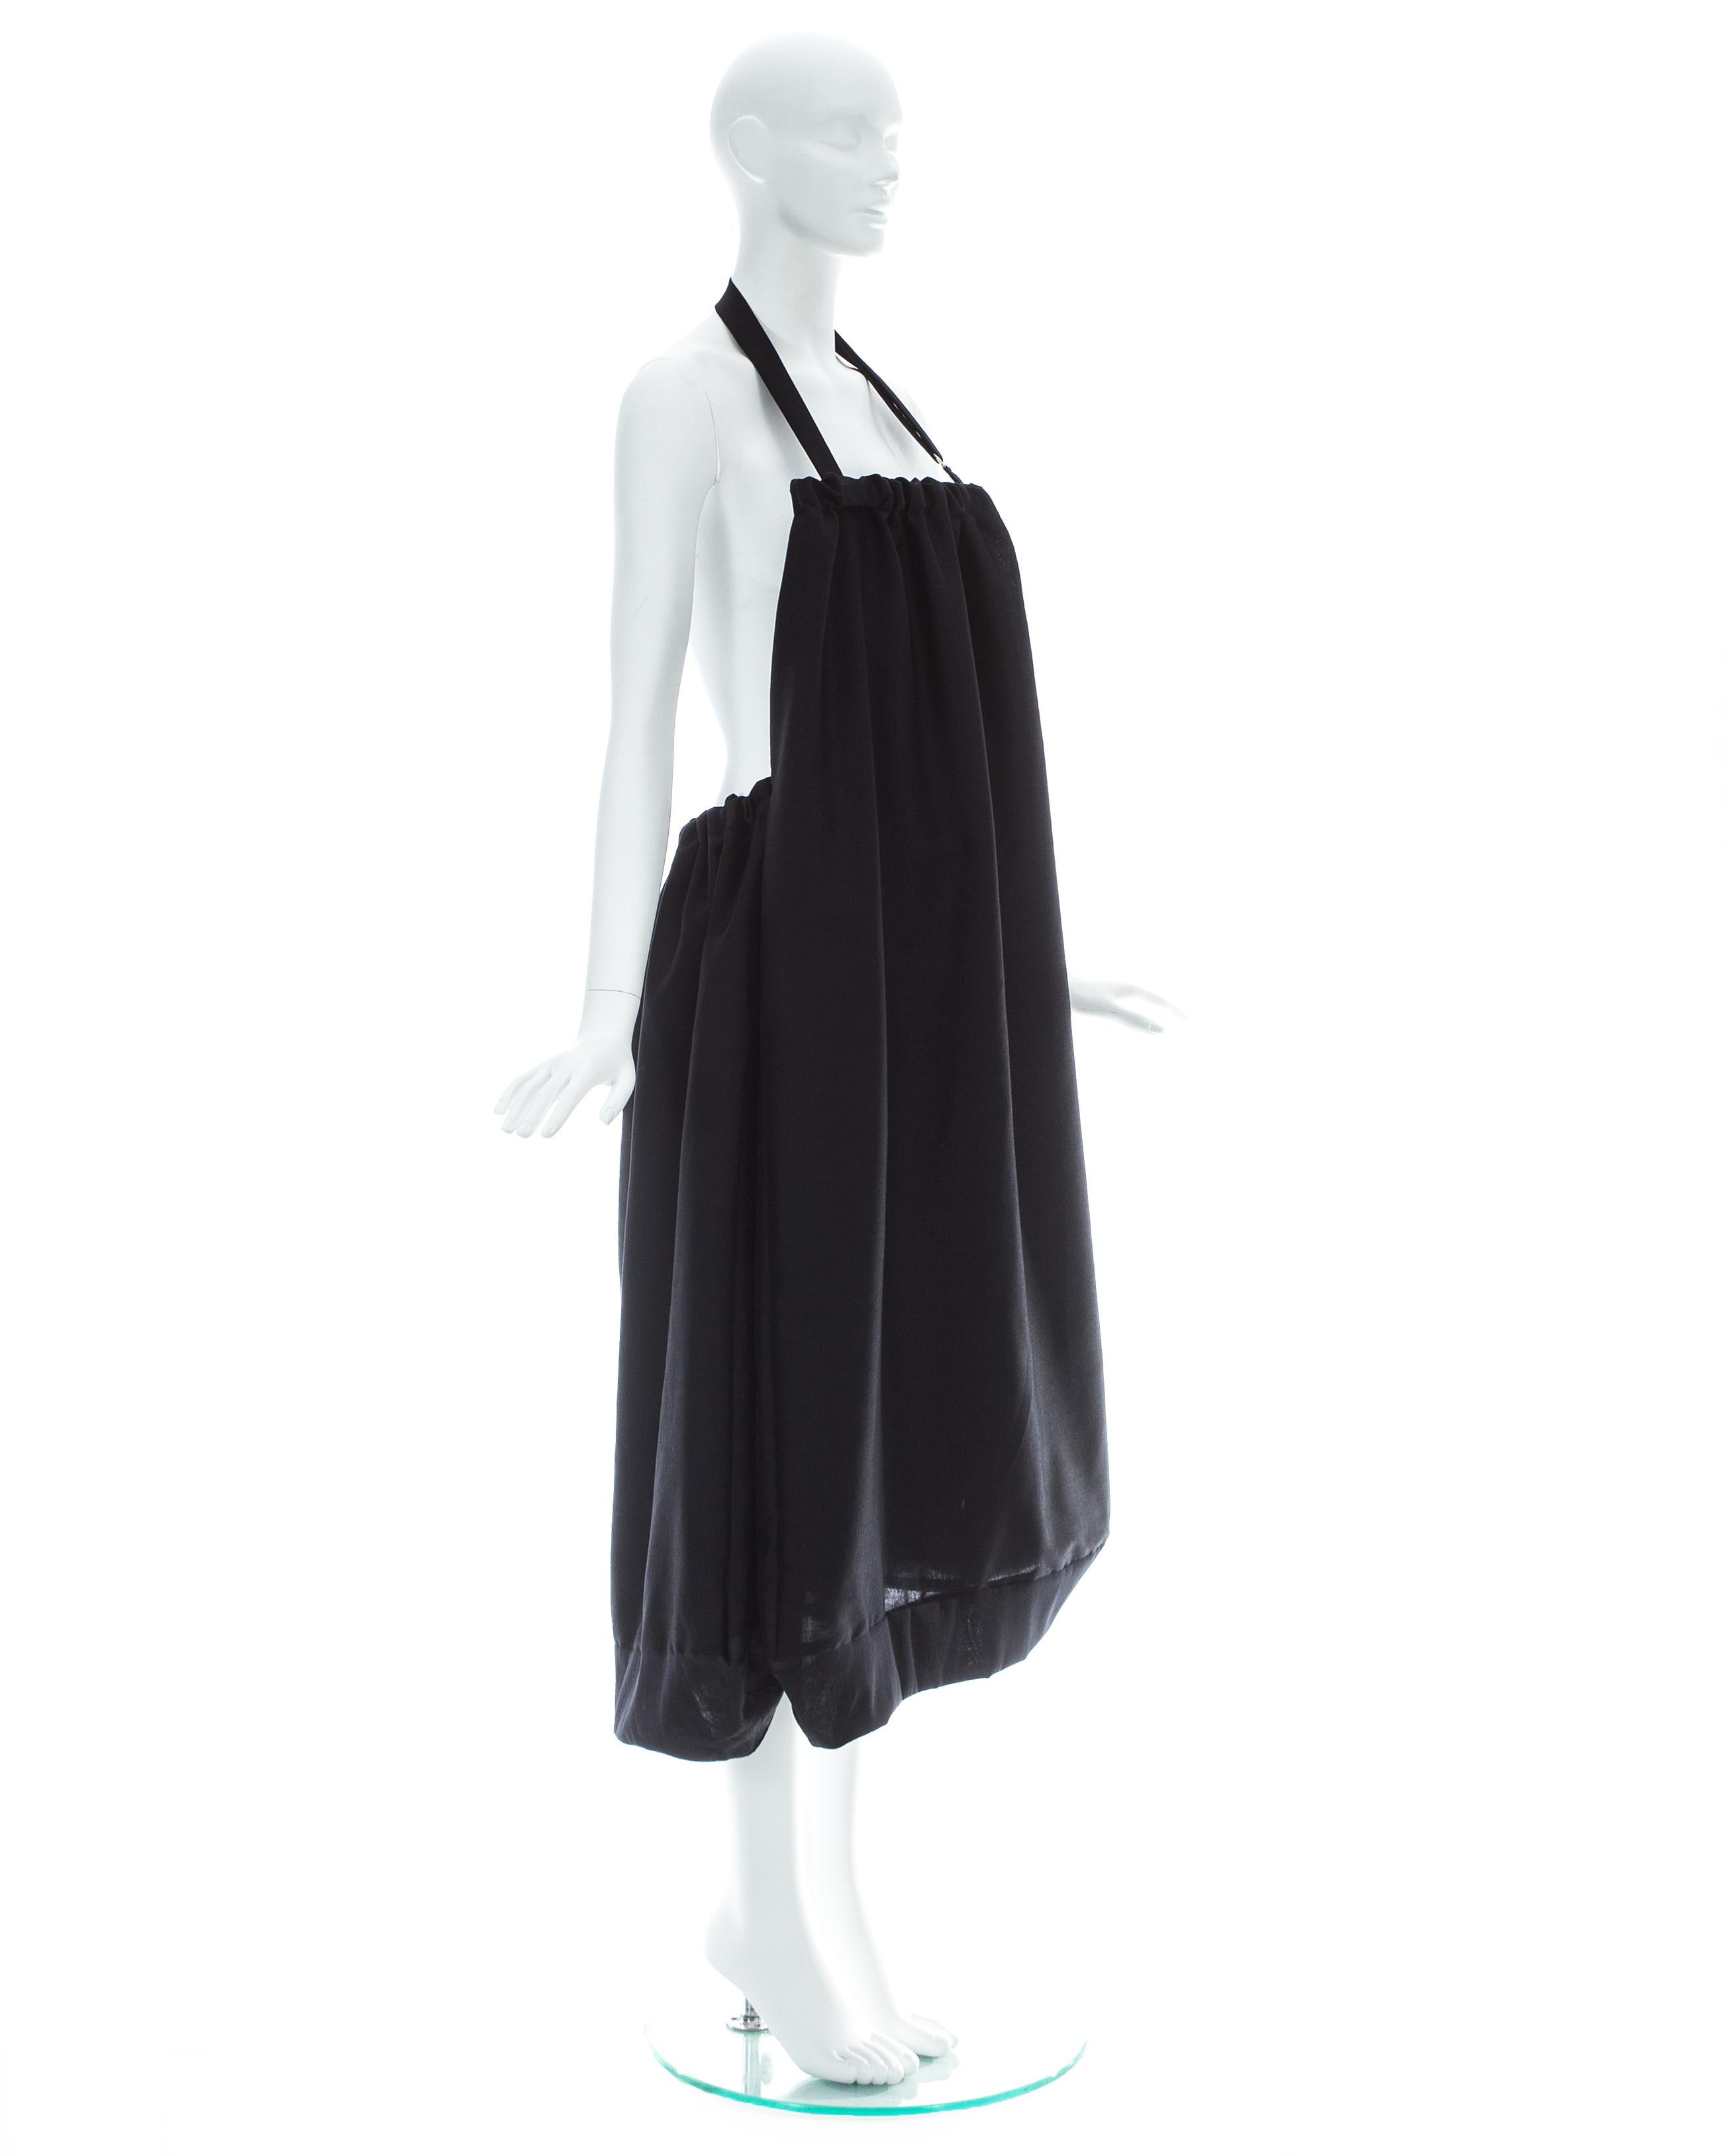 Women's Yohji Yamamoto black wool dress with built-in bag, ss 2001 For Sale